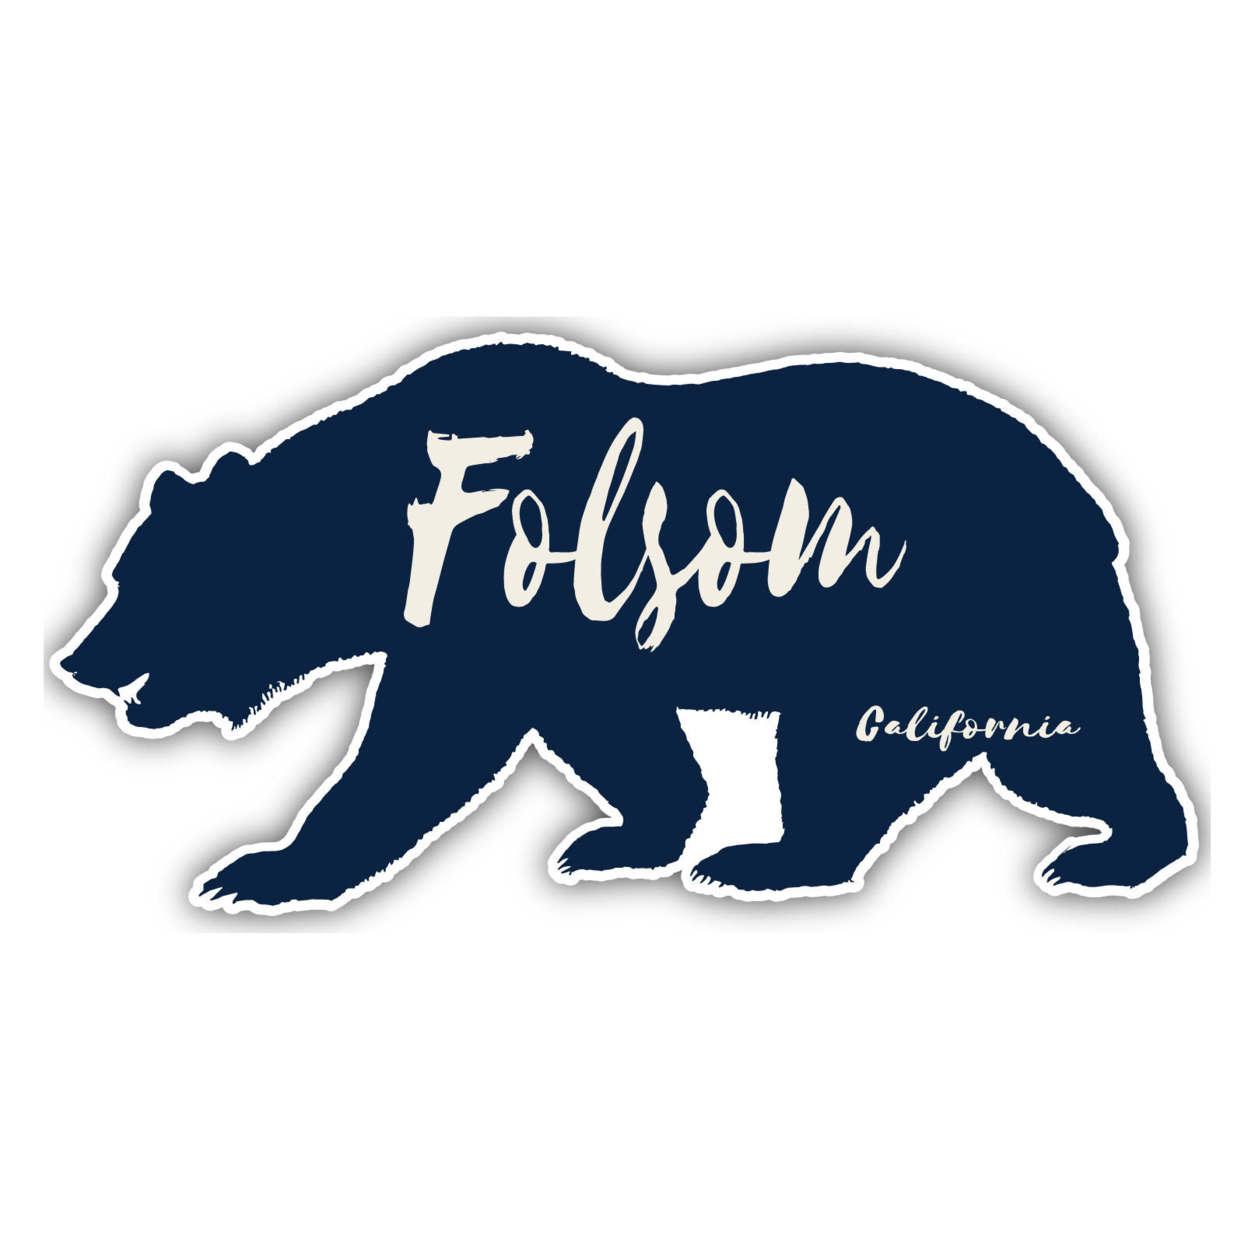 Folsom California Souvenir Decorative Stickers (Choose Theme And Size) - Single Unit, 6-Inch, Bear